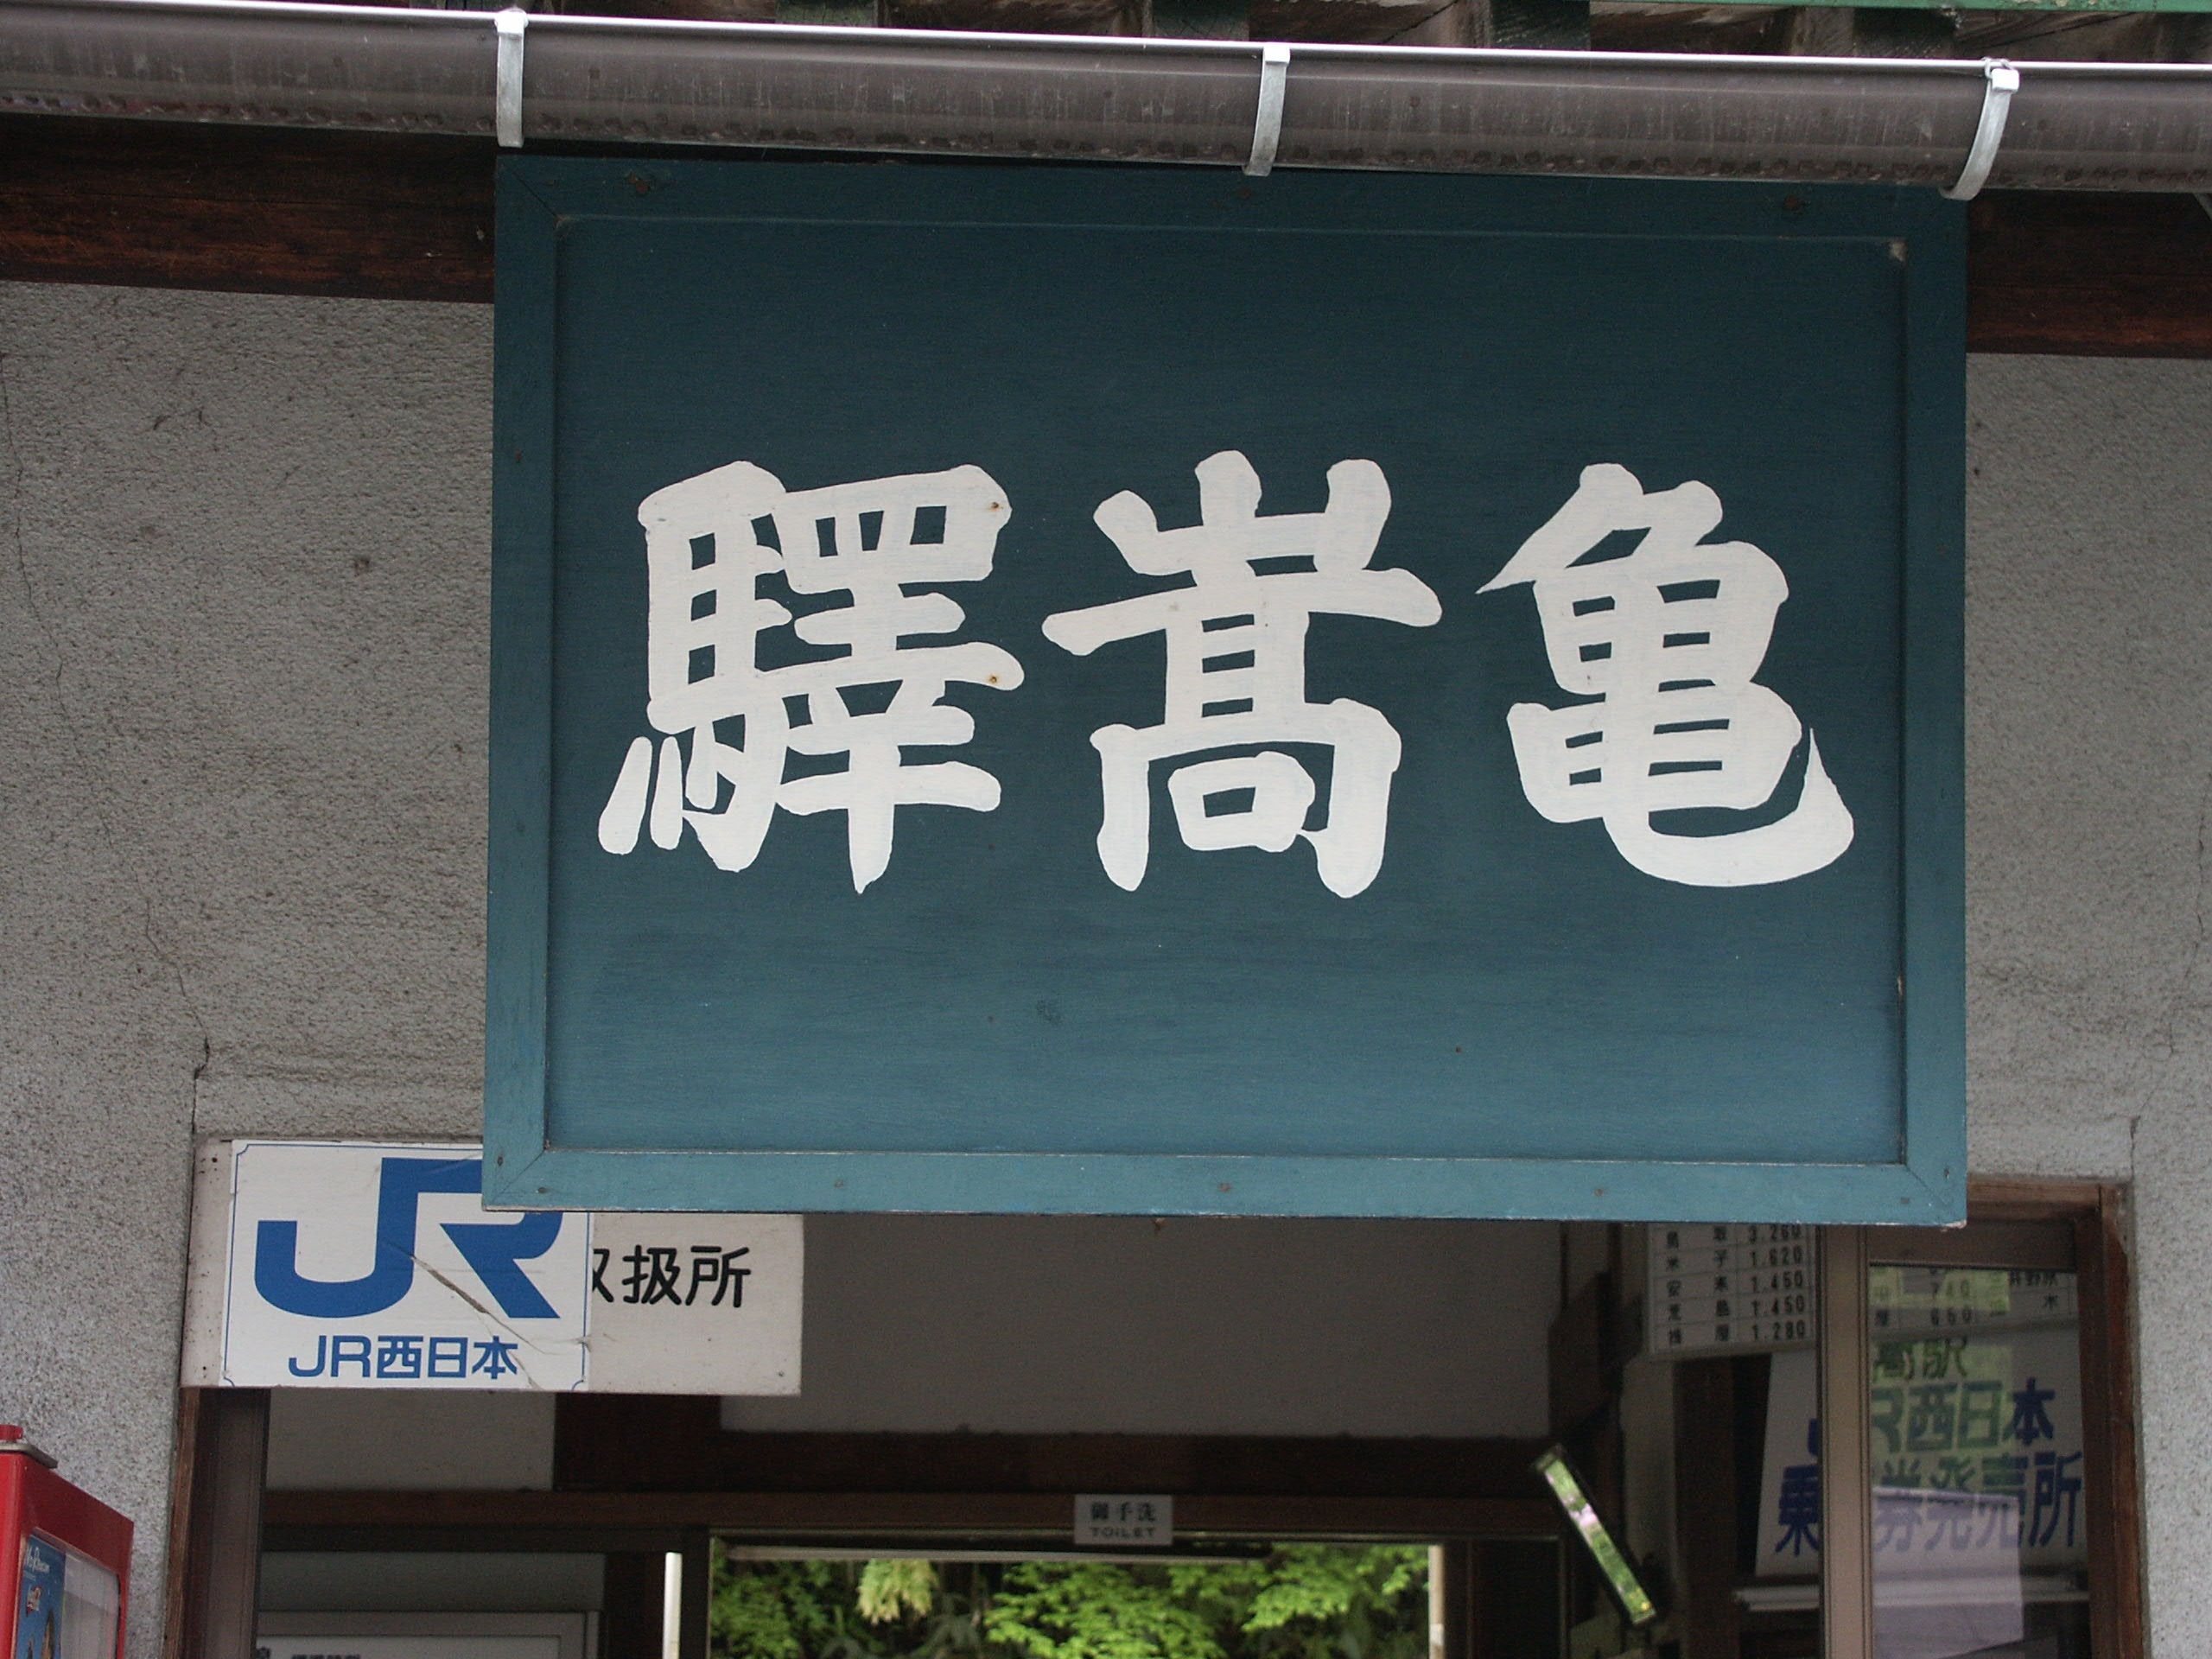 Kisuki Line, Train, Local Lines, text, communication